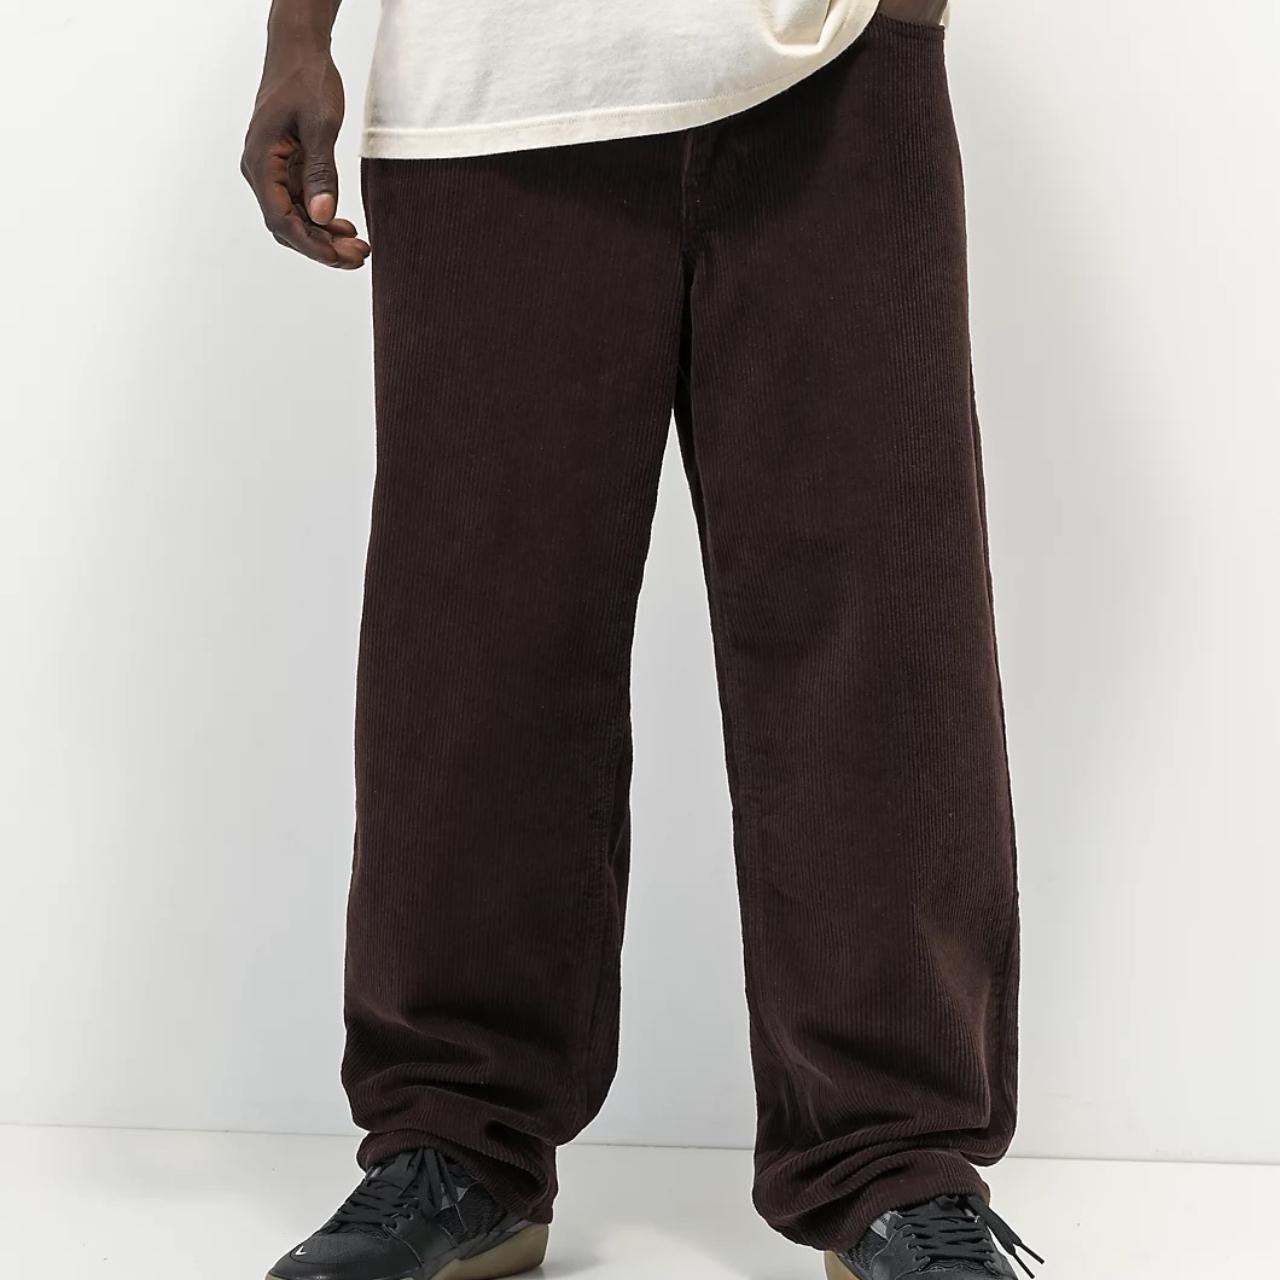 Empyre Skate Java Corduroy Pants Size 30 9/10 Brown... - Depop